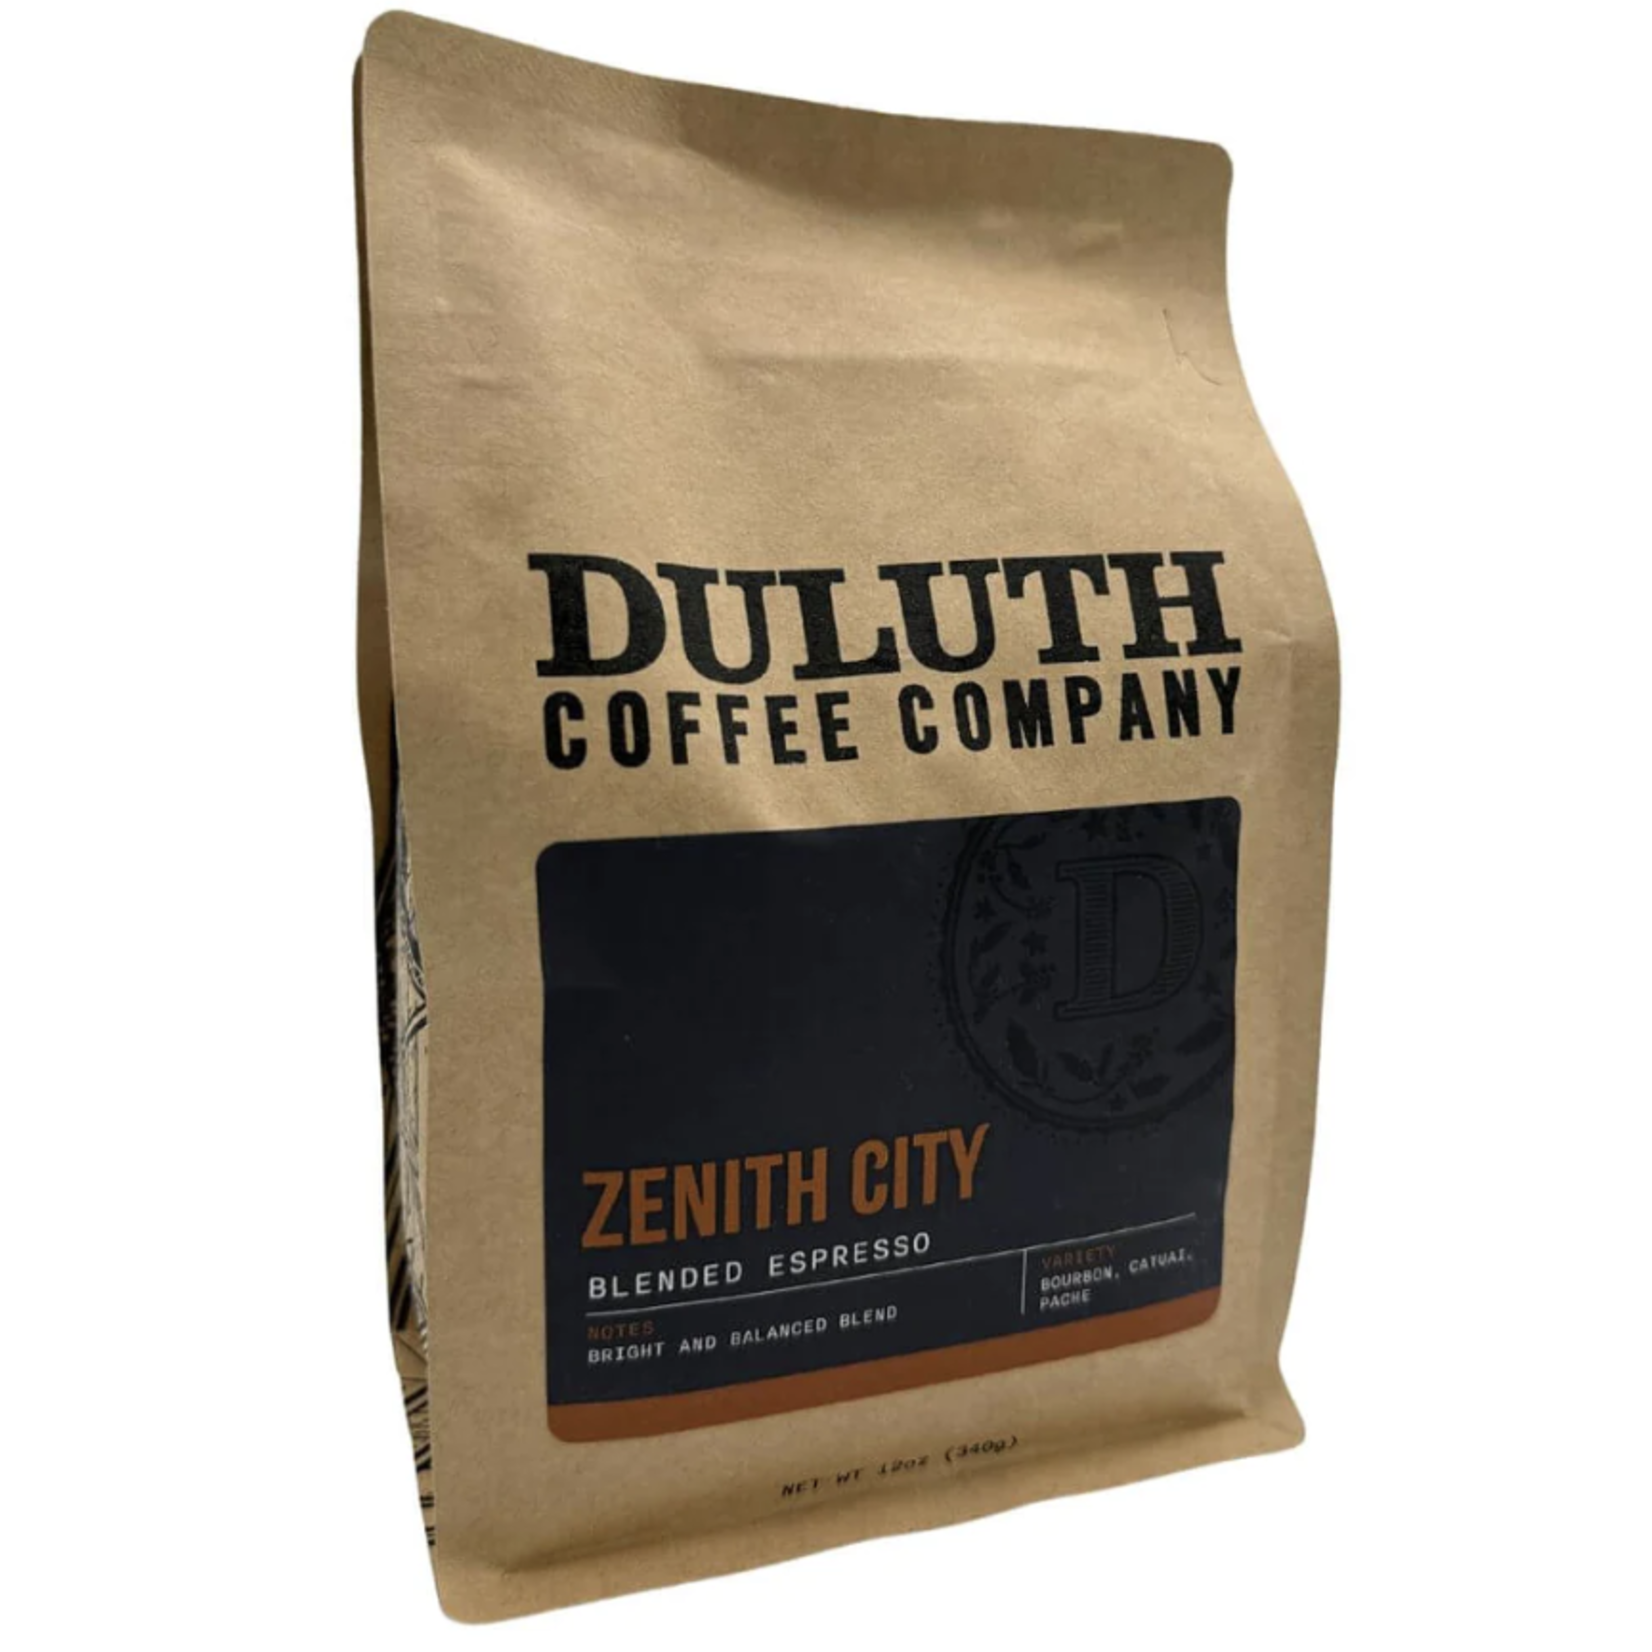 Duluth Coffee Company Zenith City Espresso, 12oz Whole Bean